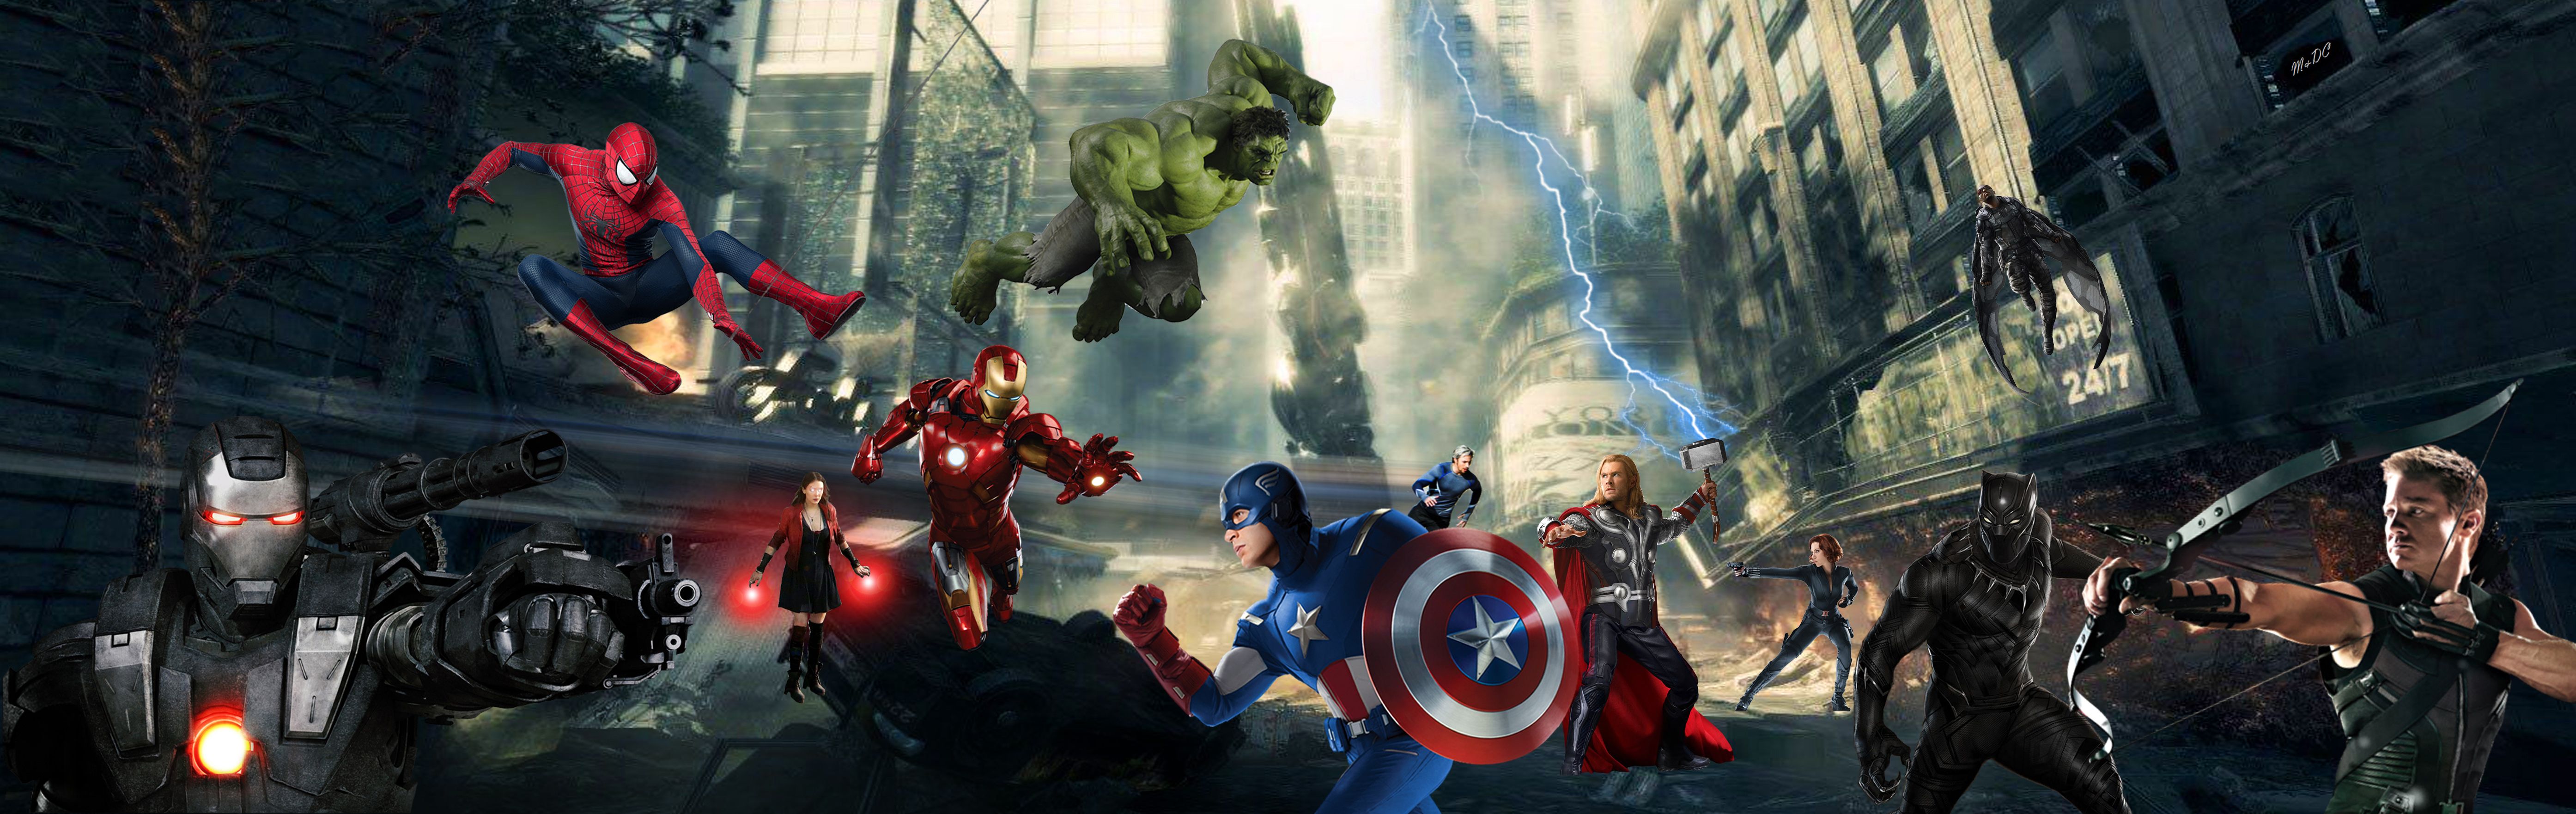 Avengers Assemble Artwork 4k, HD Superheroes, 4k Wallpaper